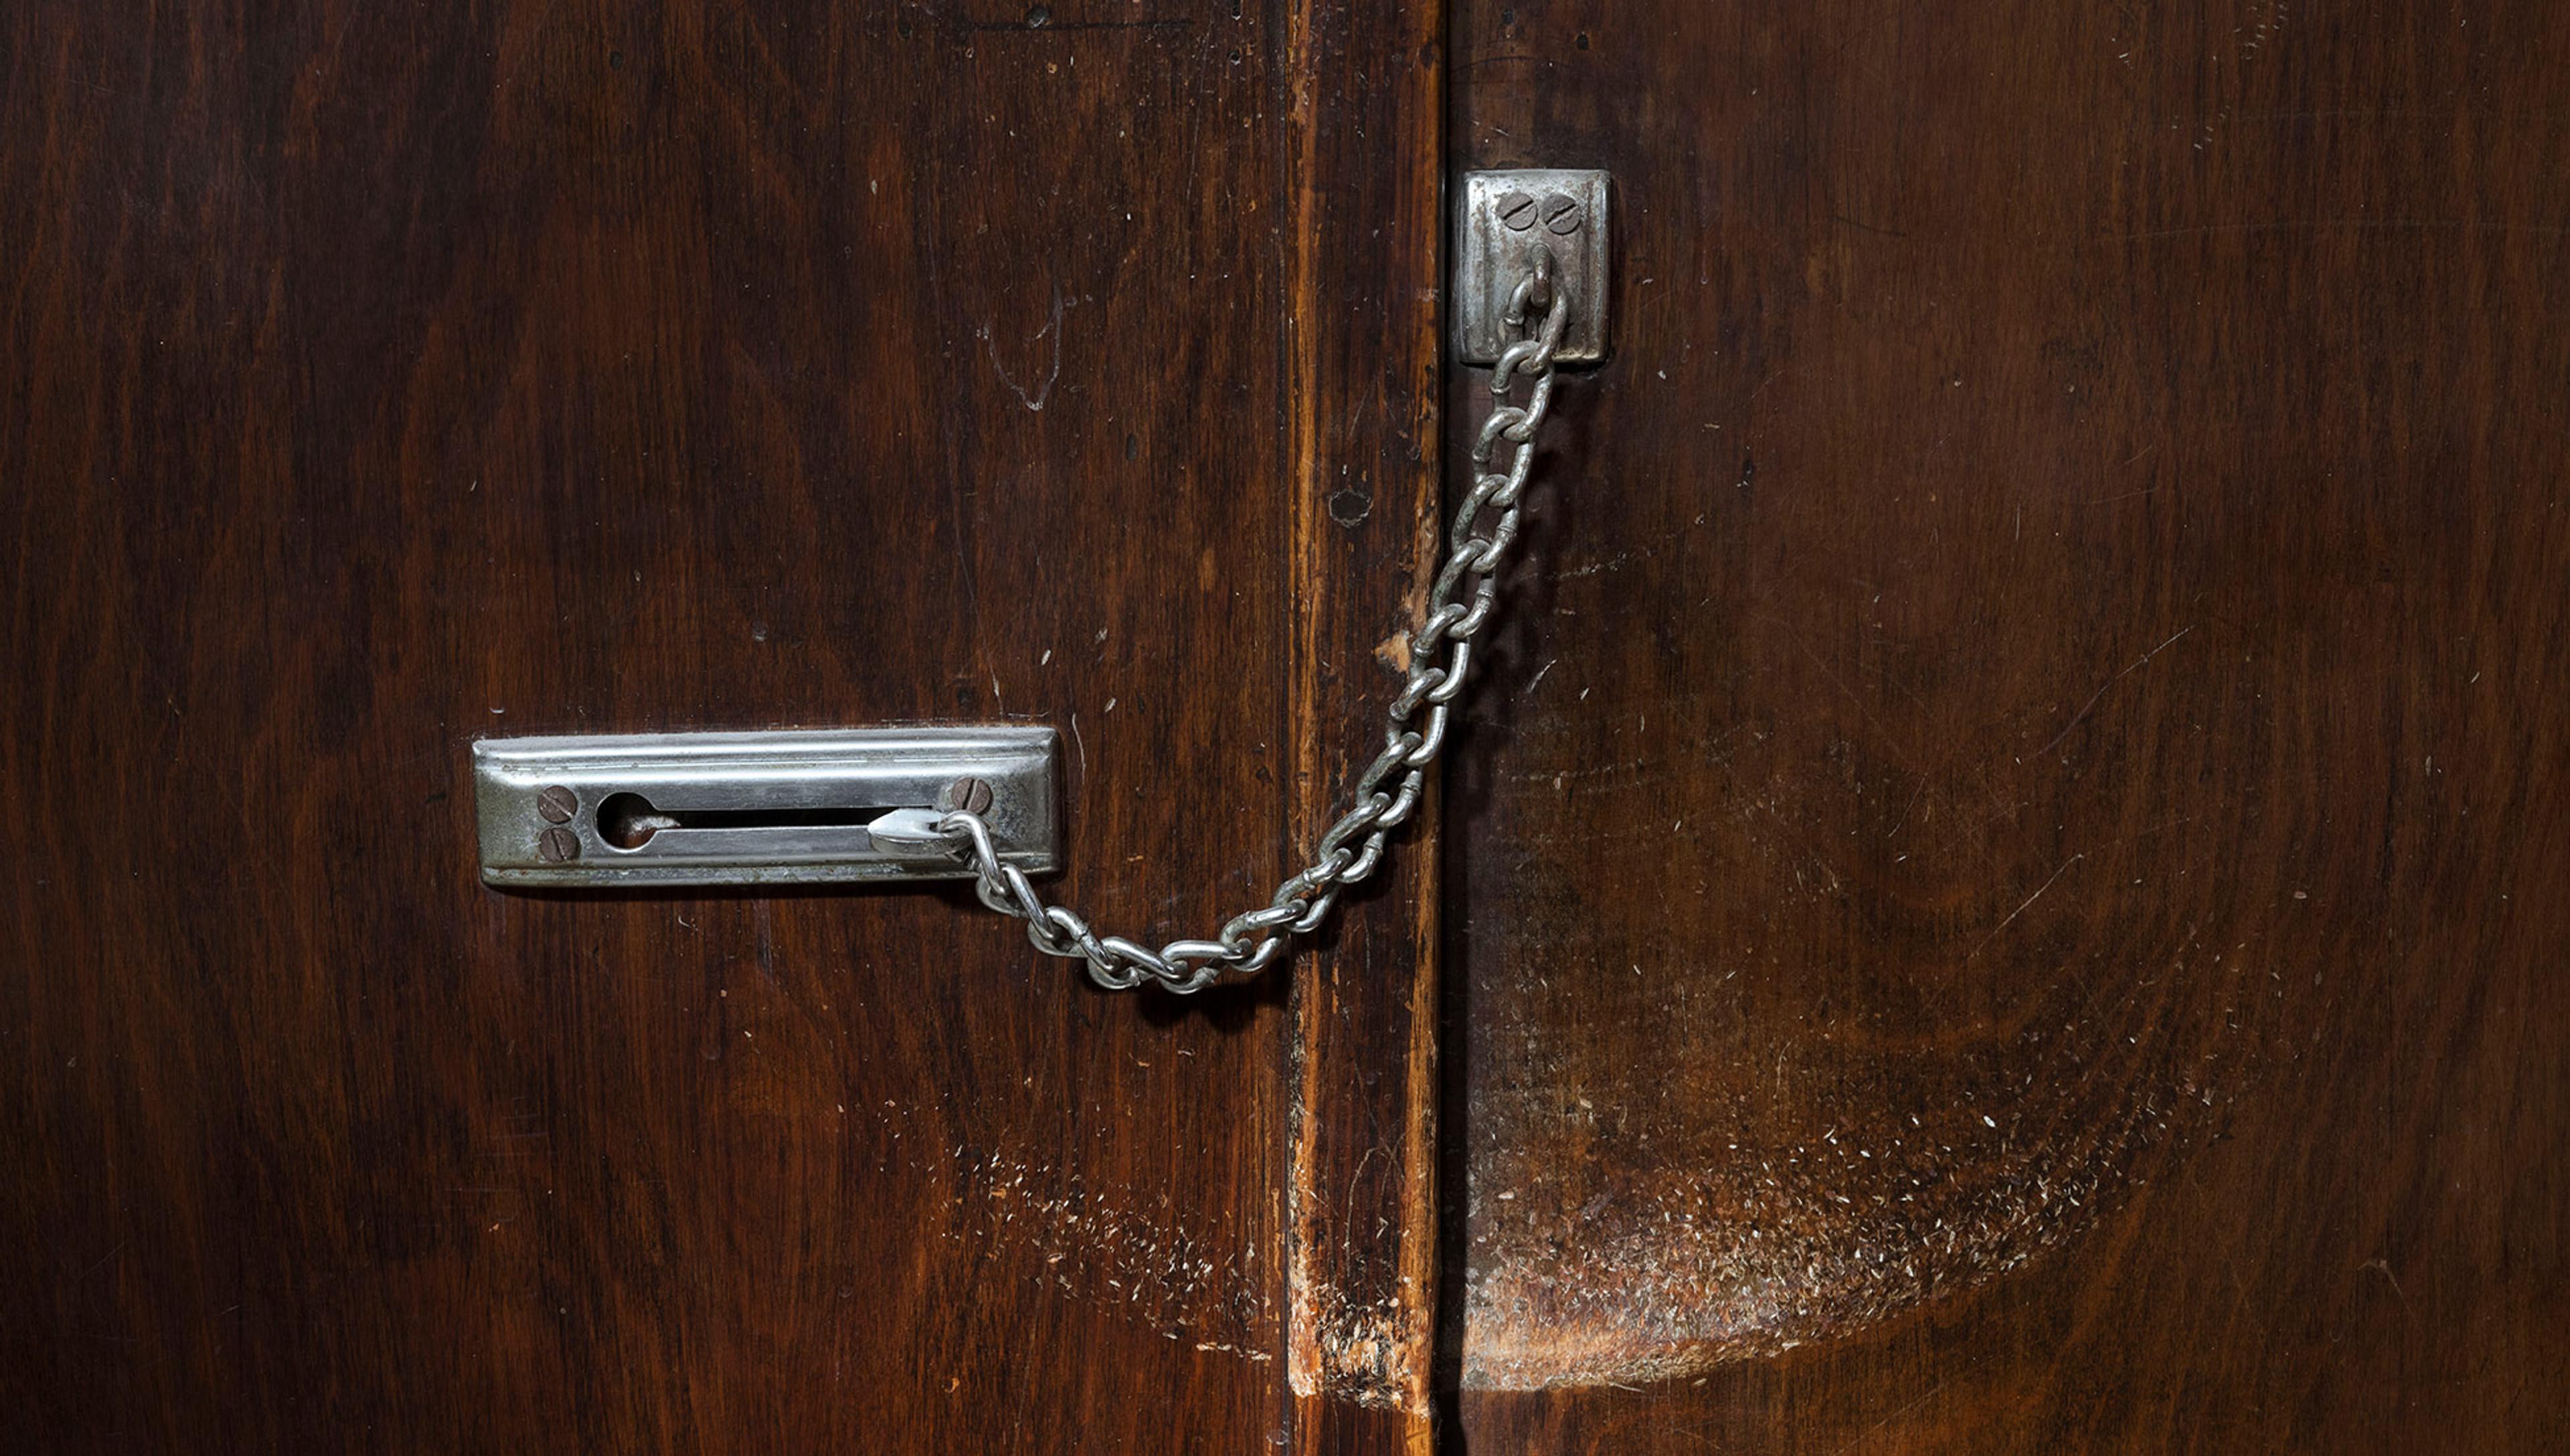 Close-up of a closed metal door-chain on a wooden door